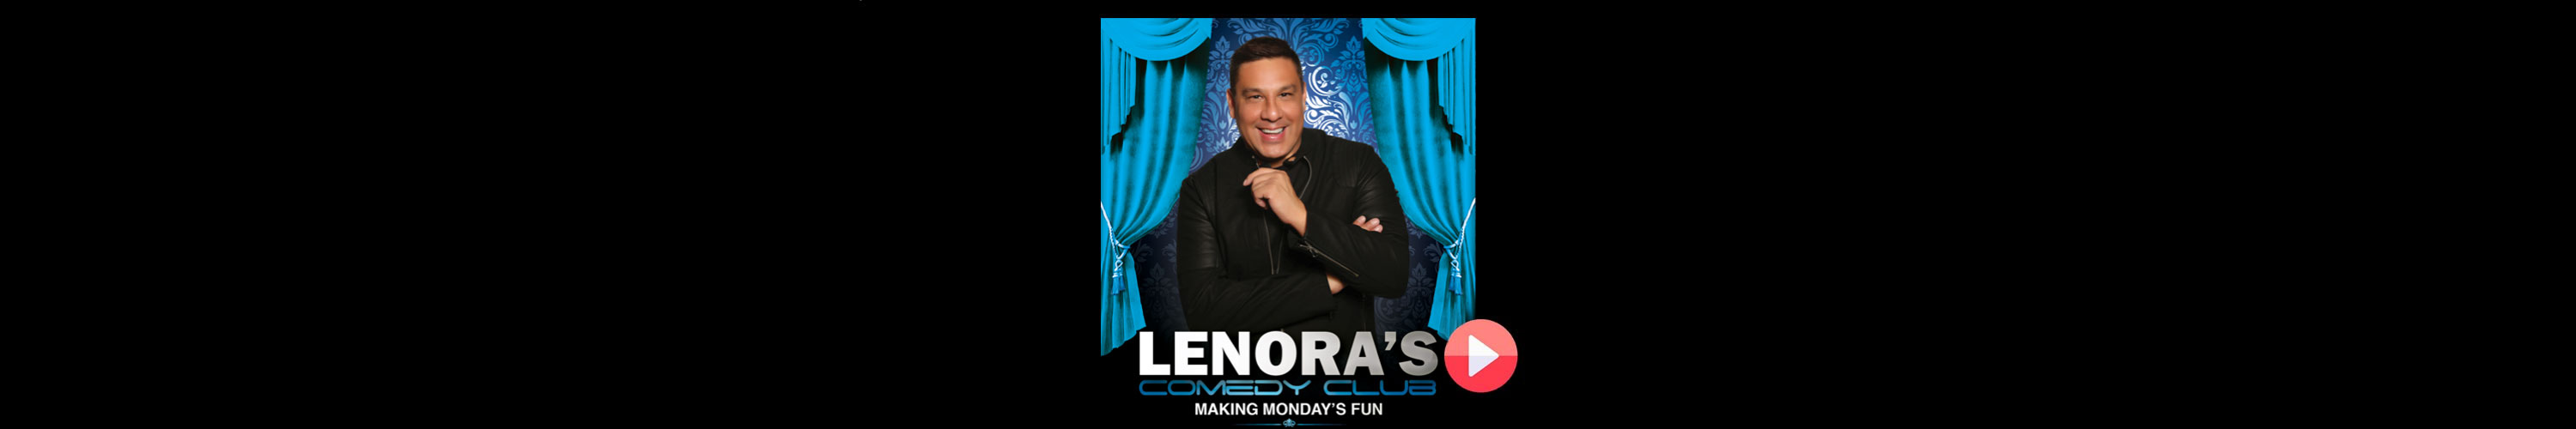 Lenora's Comedy Club